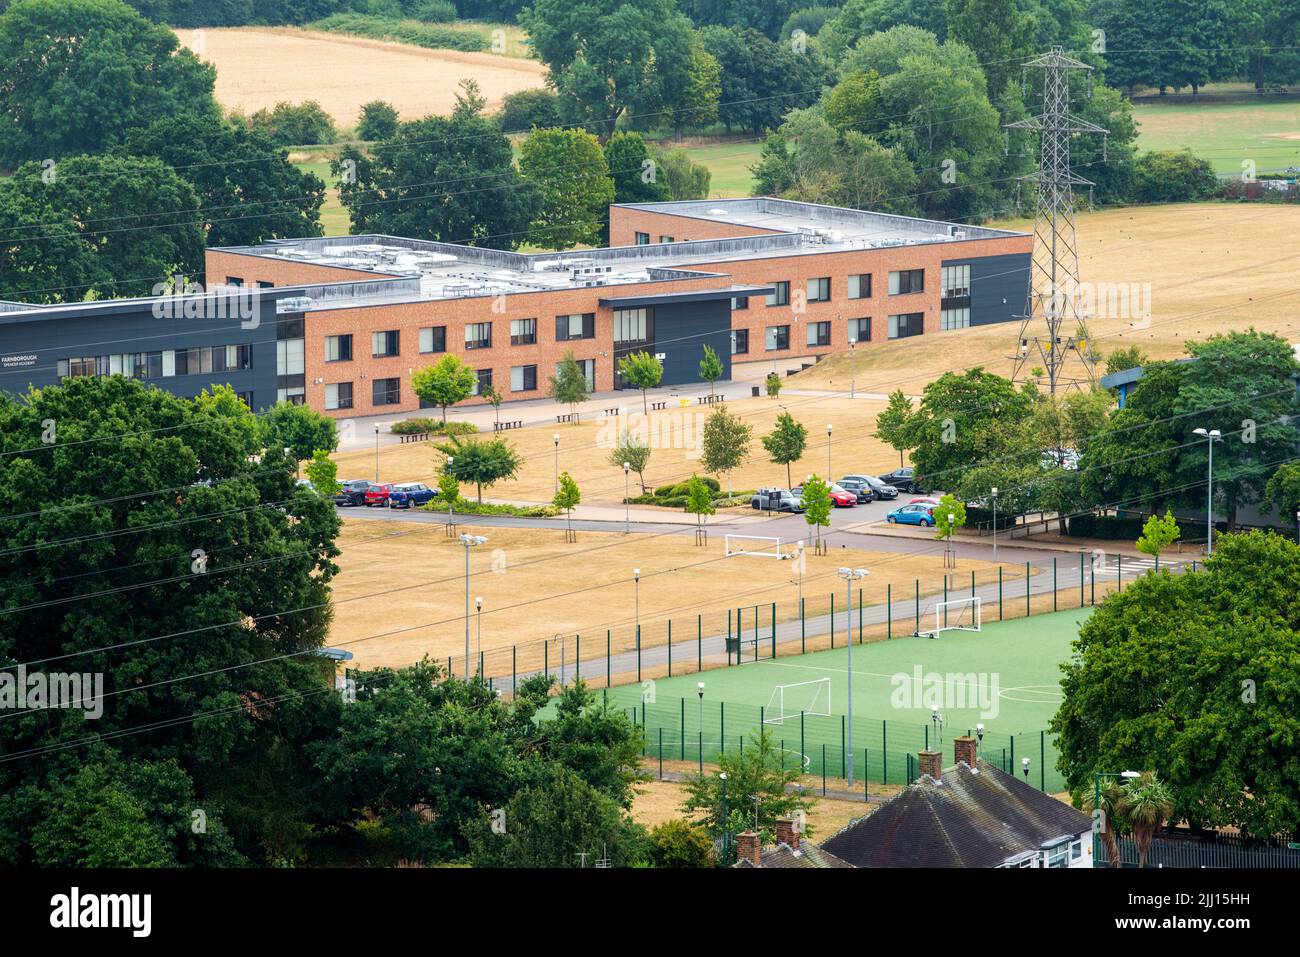 Imagen aérea de la Academia Farnborough Spencer en Clifton capturada desde el tejado de Southchurch Court, Nottinghamshire, Inglaterra, Reino Unido Foto de stock